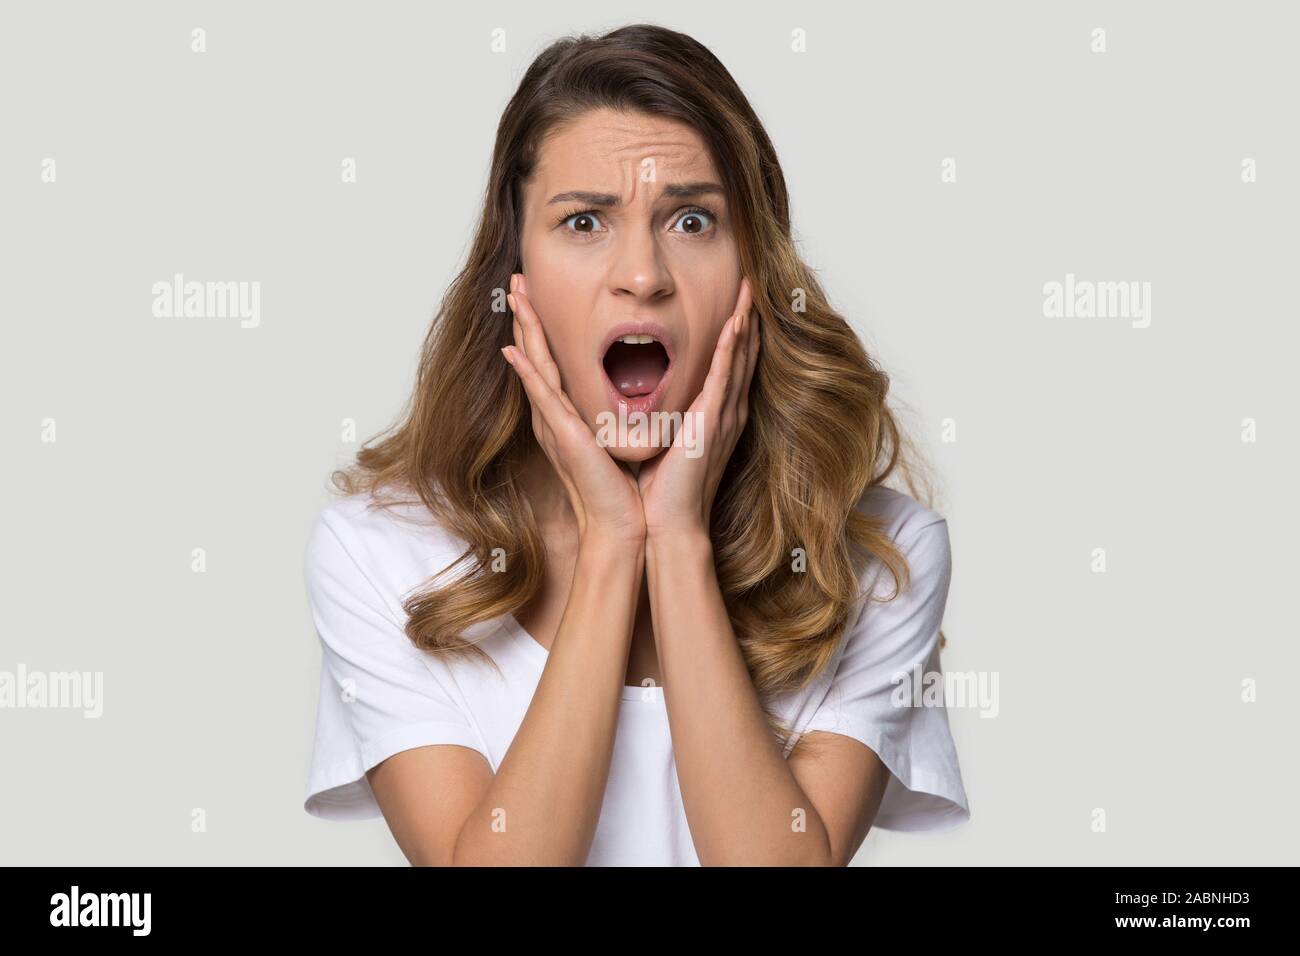 Shocked scared woman screaming, feeling afraid, looking at camera Stock Photo